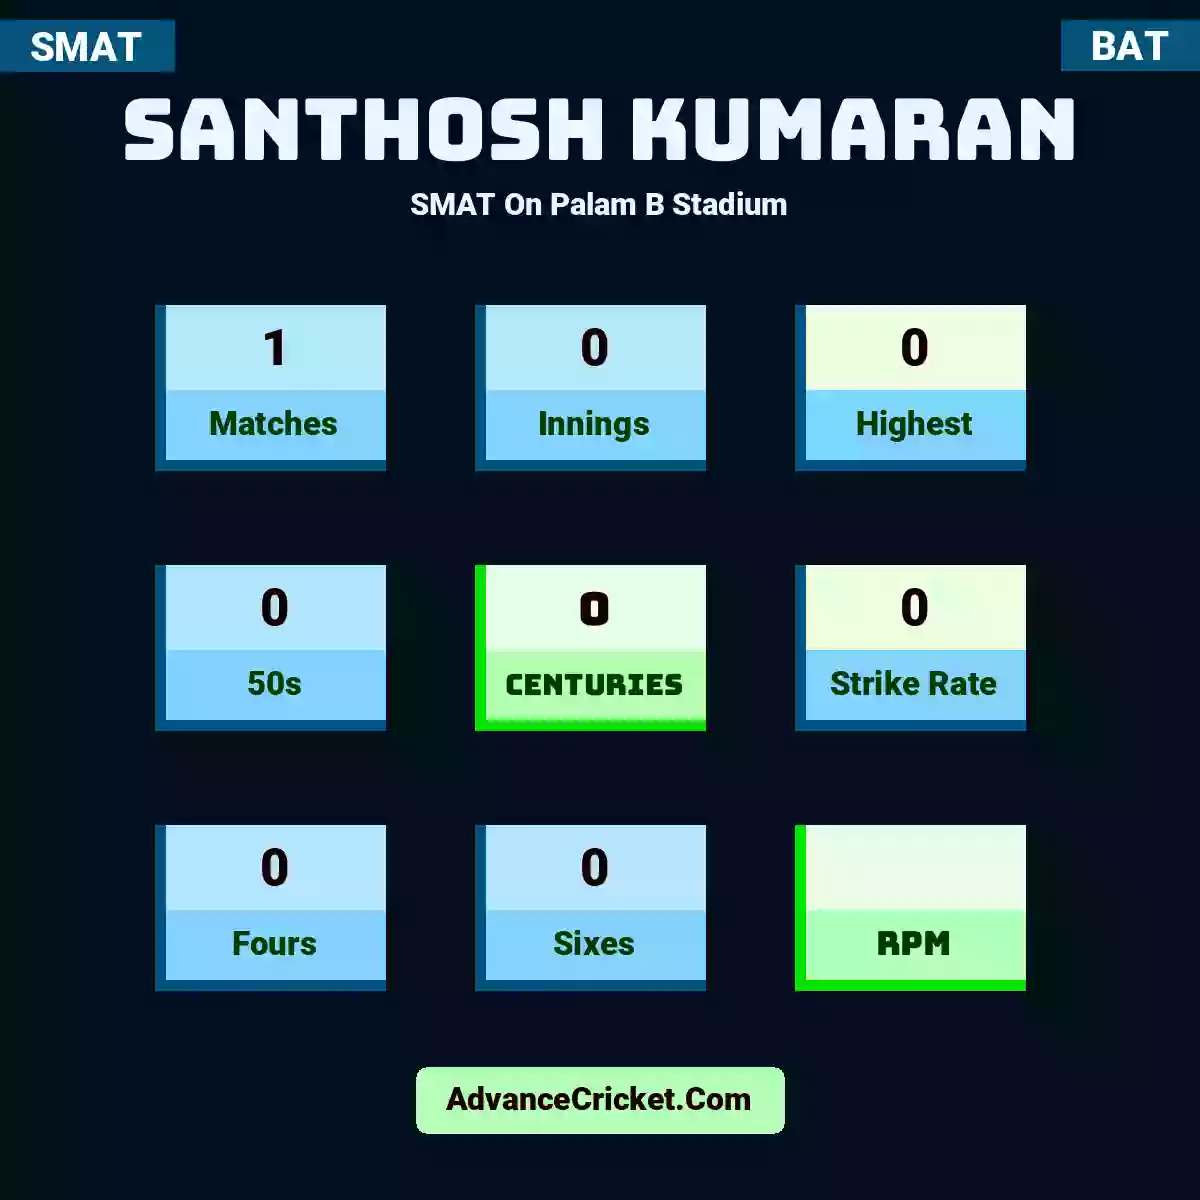 Santhosh Kumaran SMAT  On Palam B Stadium, Santhosh Kumaran played 1 matches, scored 0 runs as highest, 0 half-centuries, and 0 centuries, with a strike rate of 0. S.Kumaran hit 0 fours and 0 sixes.